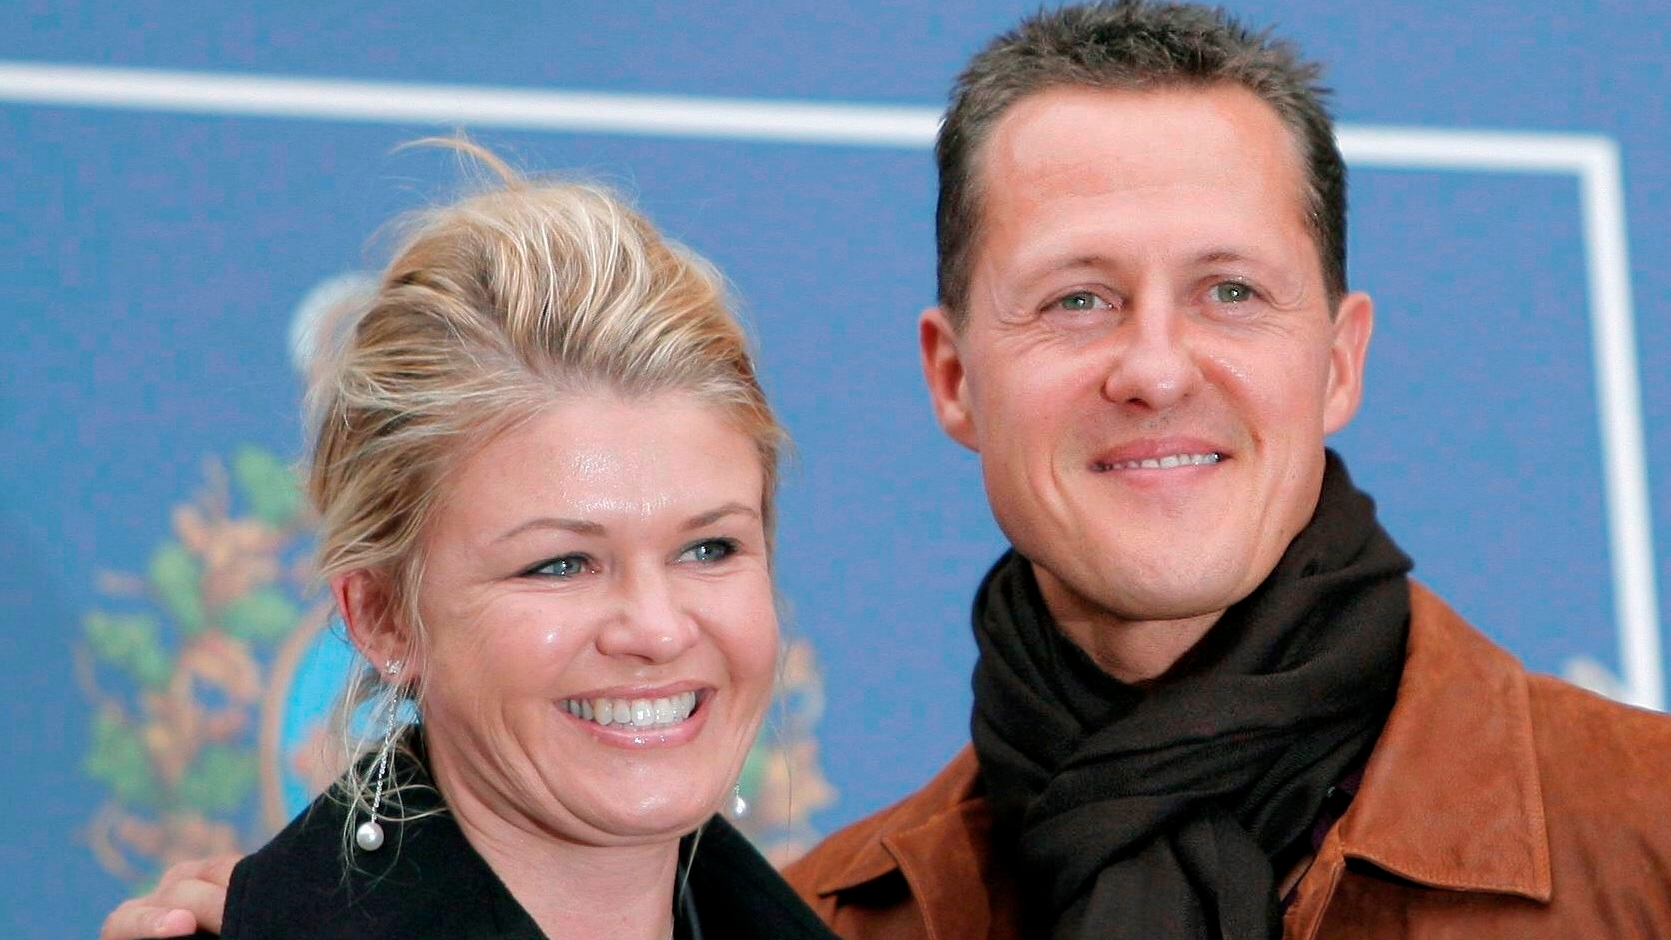 Schumacher volverá a ser operado, según el medio italiano "Contro Copertina"